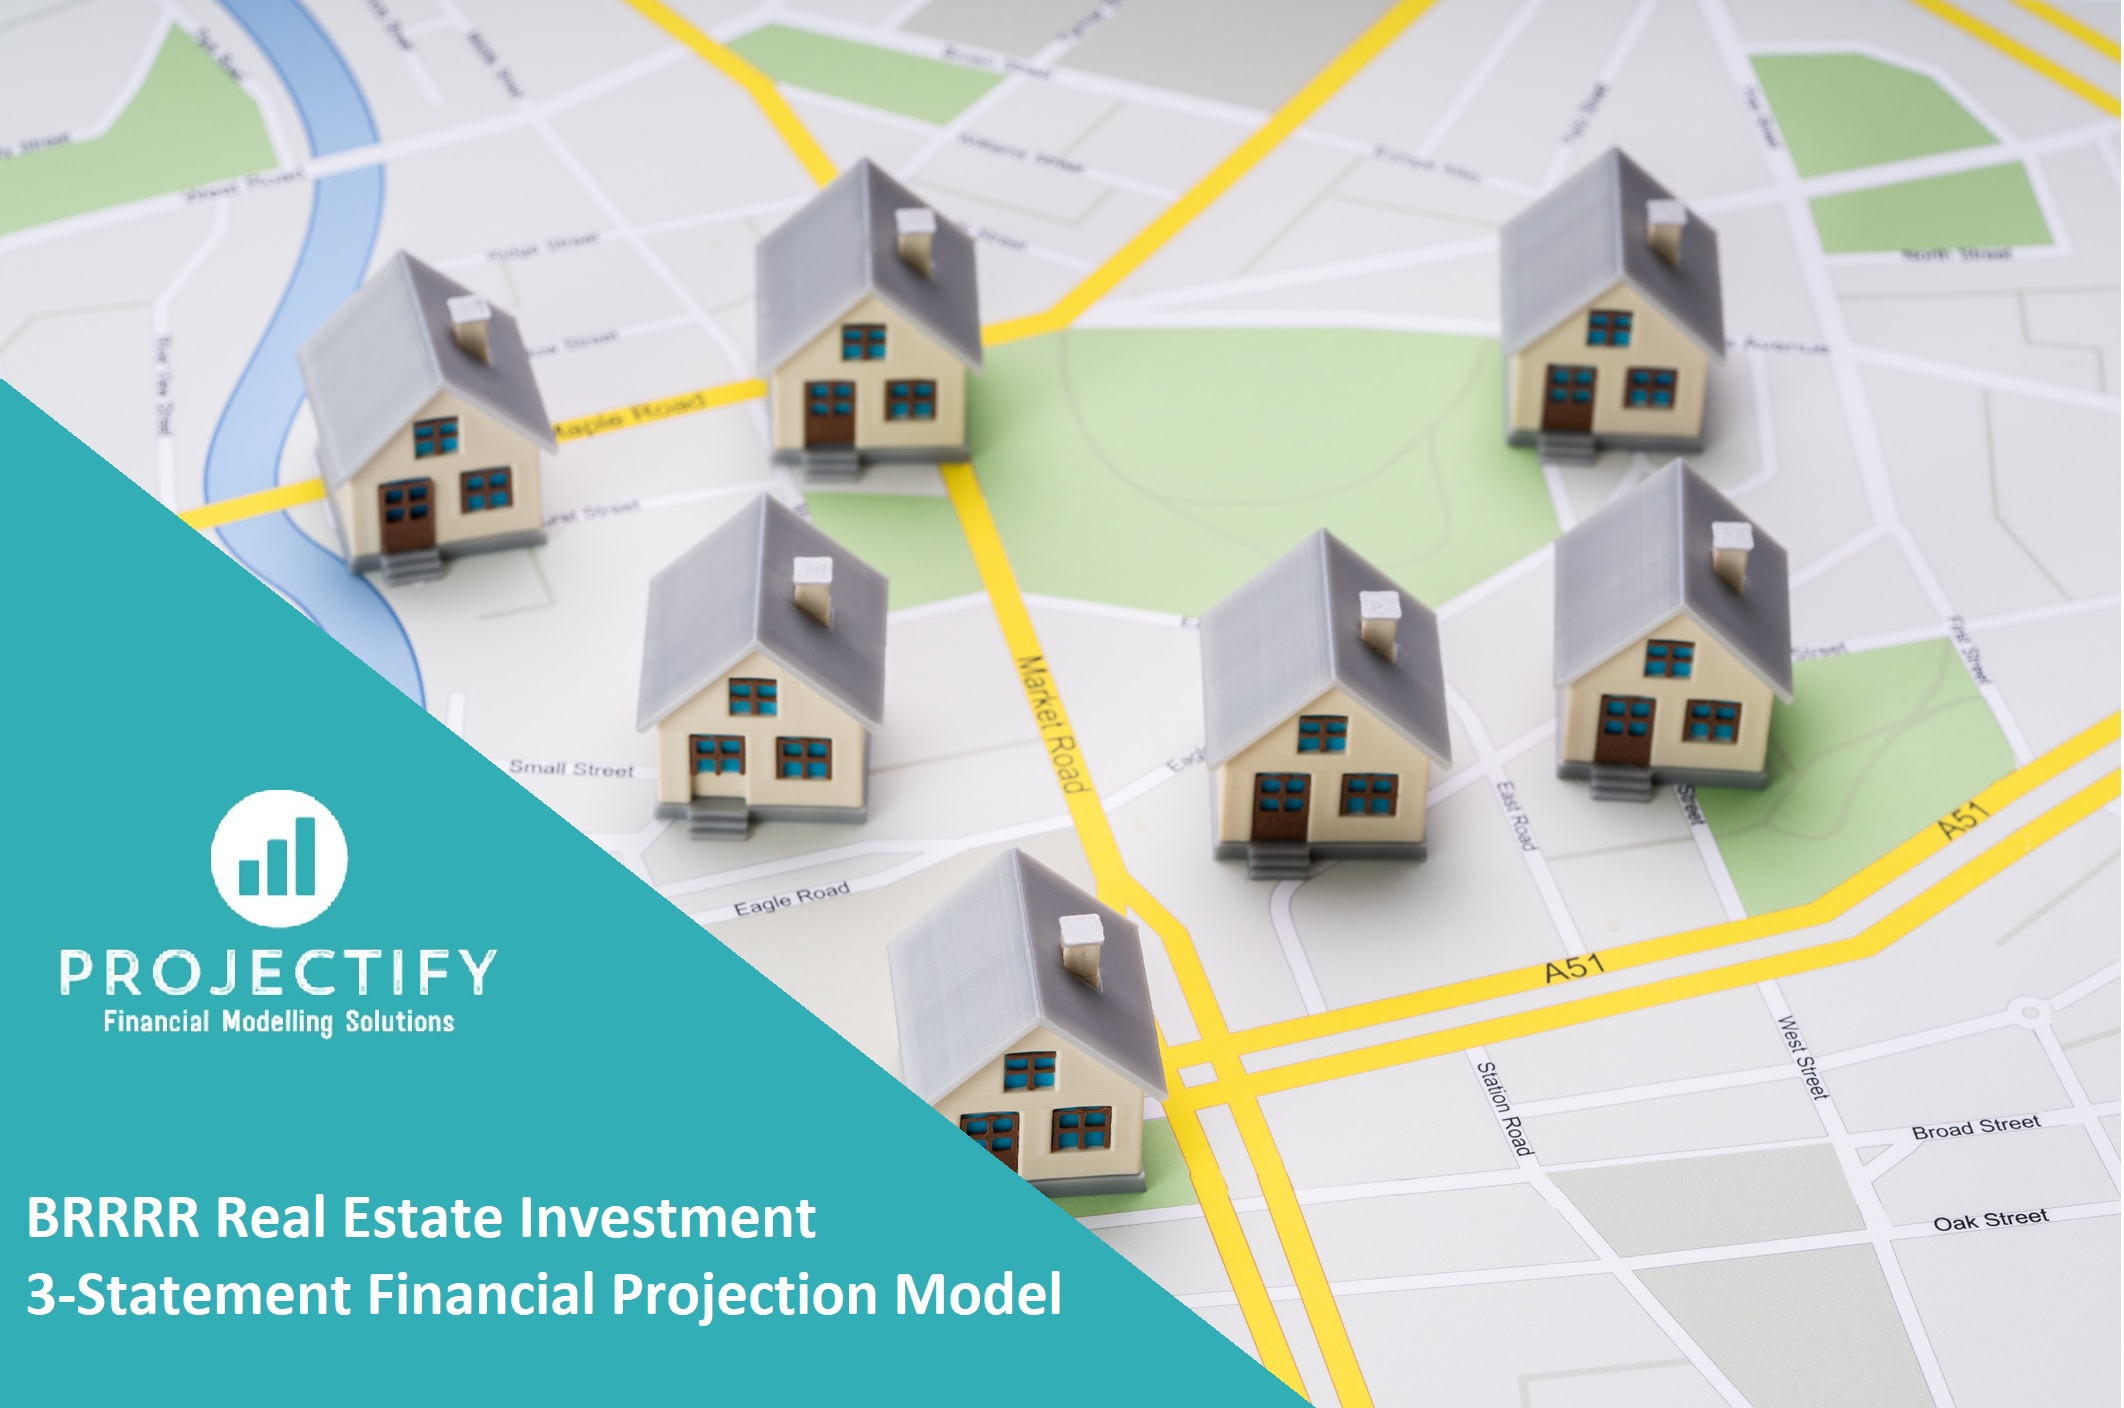 Buy, Rehab, Rent, Refinance, Repeat (BRRRR) Real Estate Investment 3 Statement Model